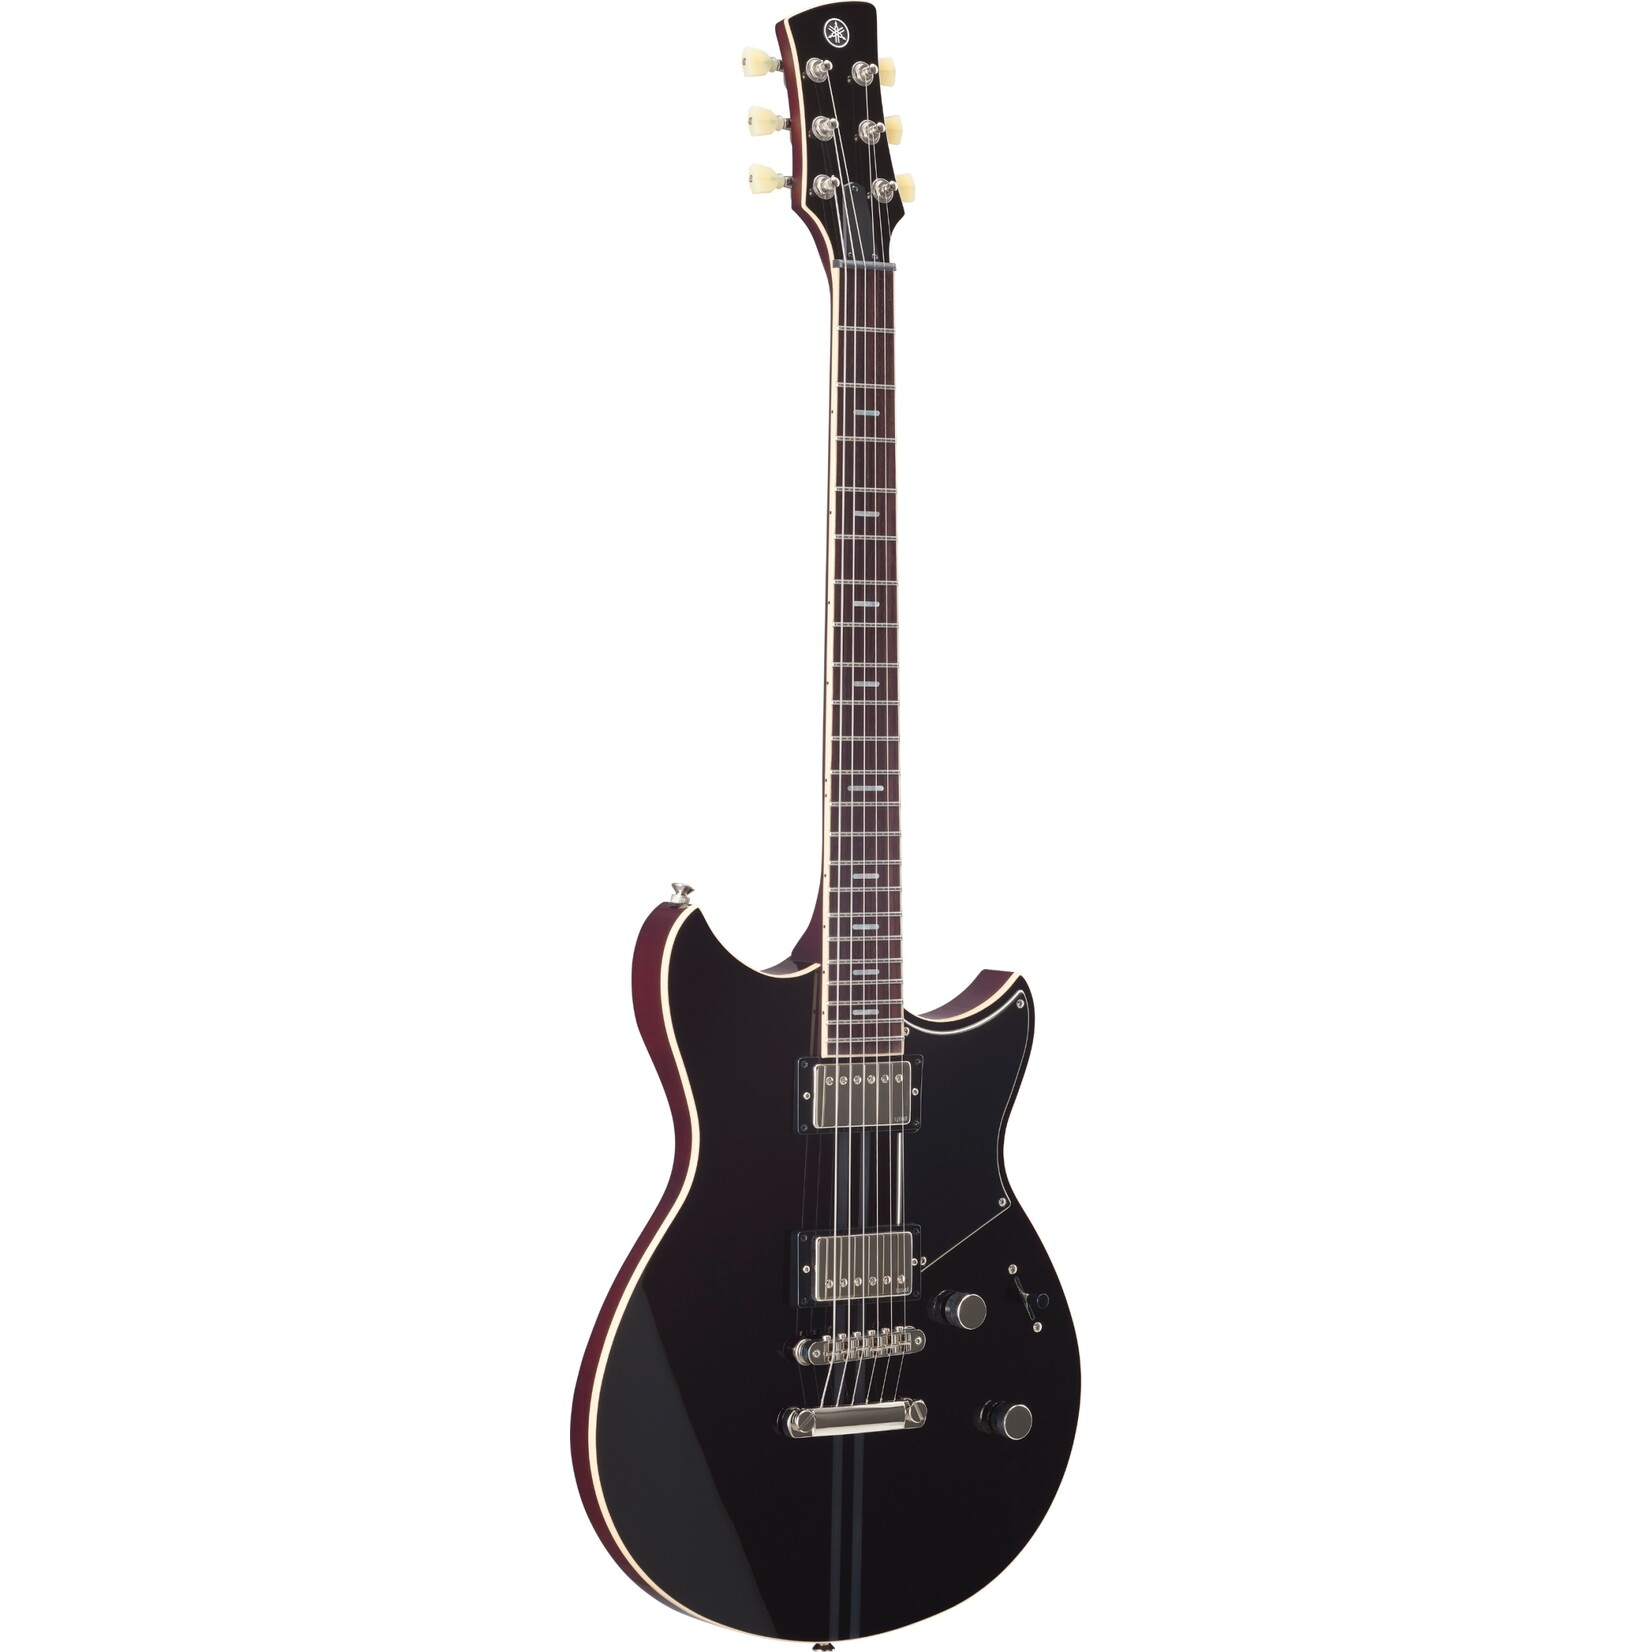 Yamaha Yamaha Revstar Standard RSS20 Electric Guitar in Black